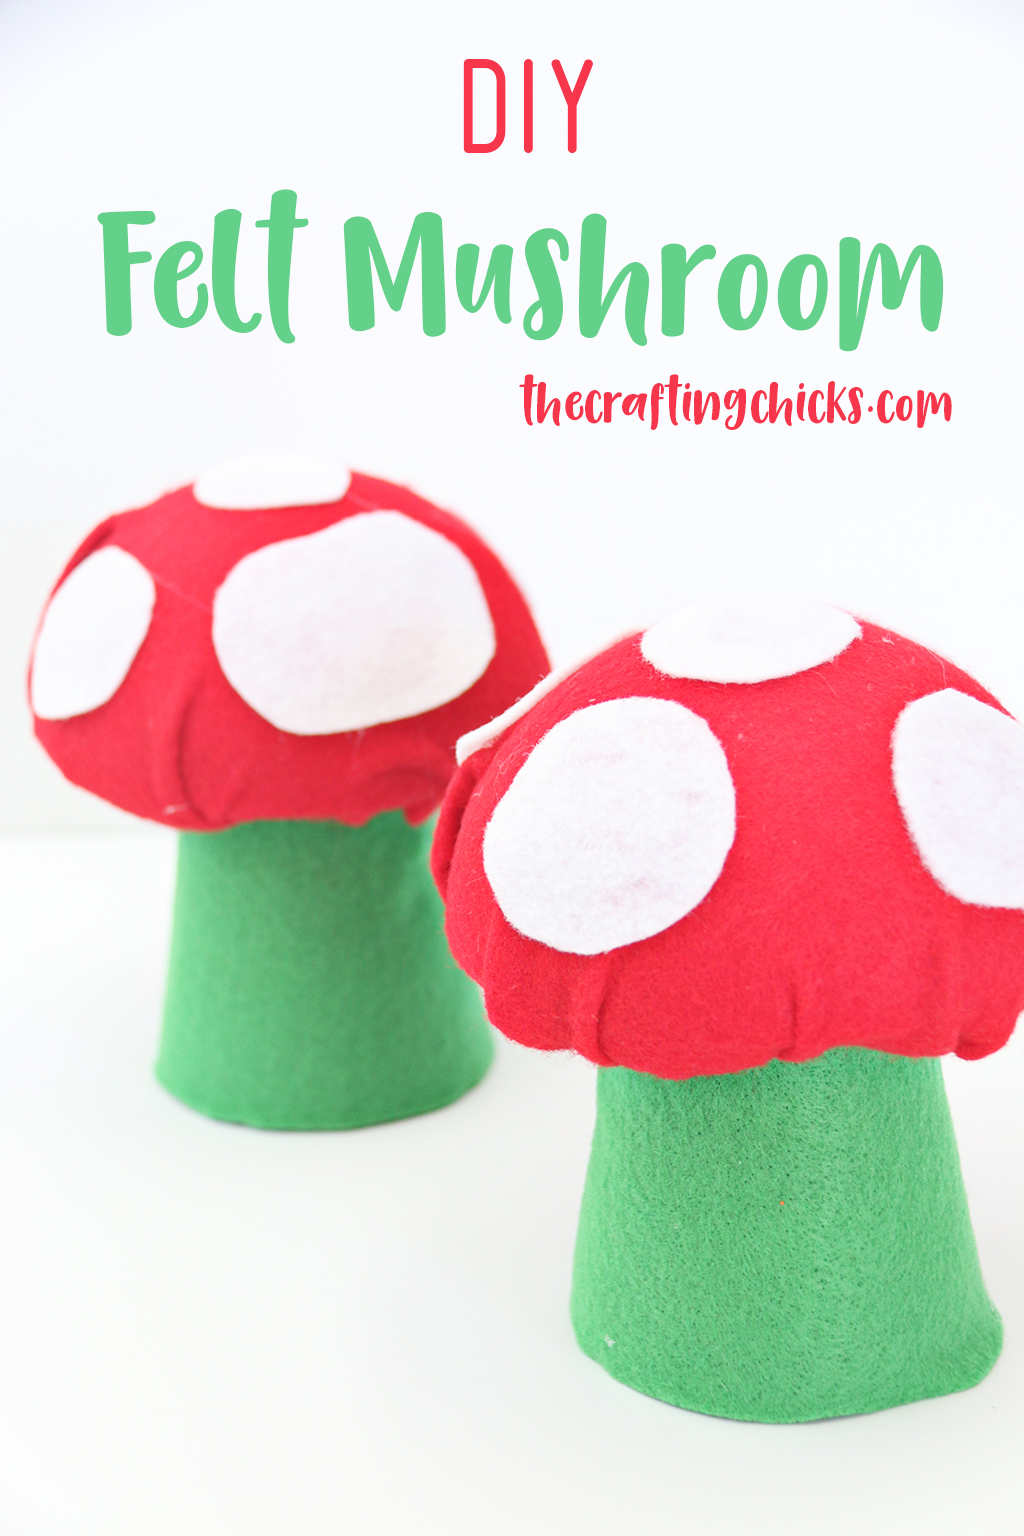 DIY Felt Mushroom | These felt mushrooms add a fun flare to a gnome or garden project...or a fun prop in a play!